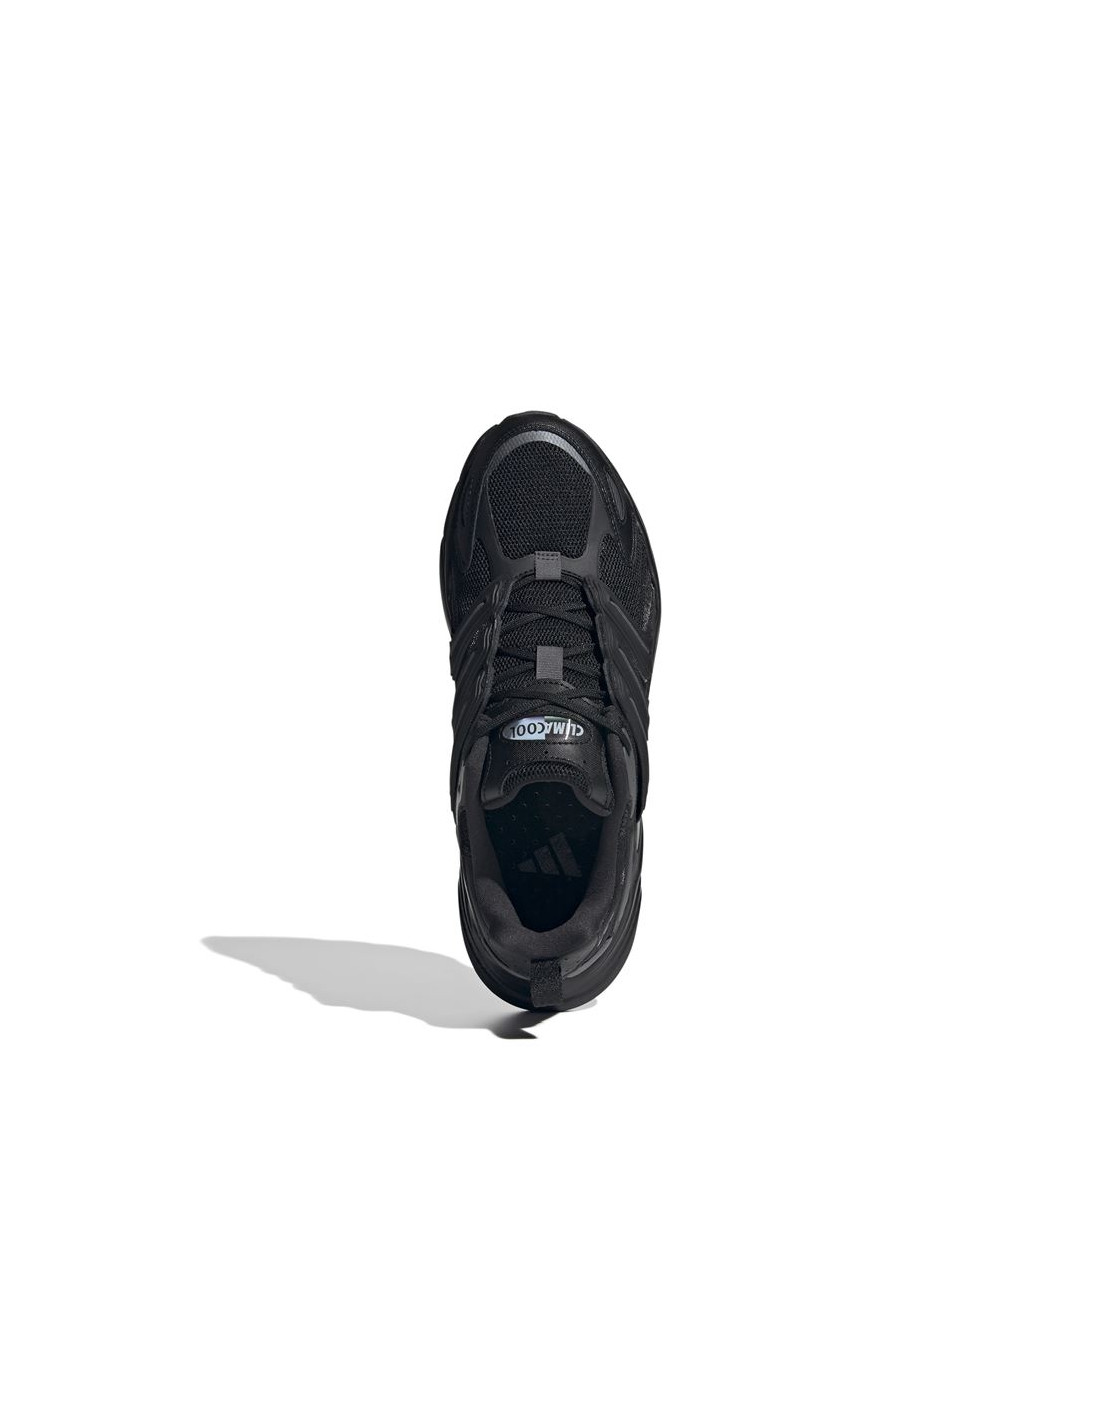 adidas Unisex-Adult Climacool Ventania Trail Running Shoe